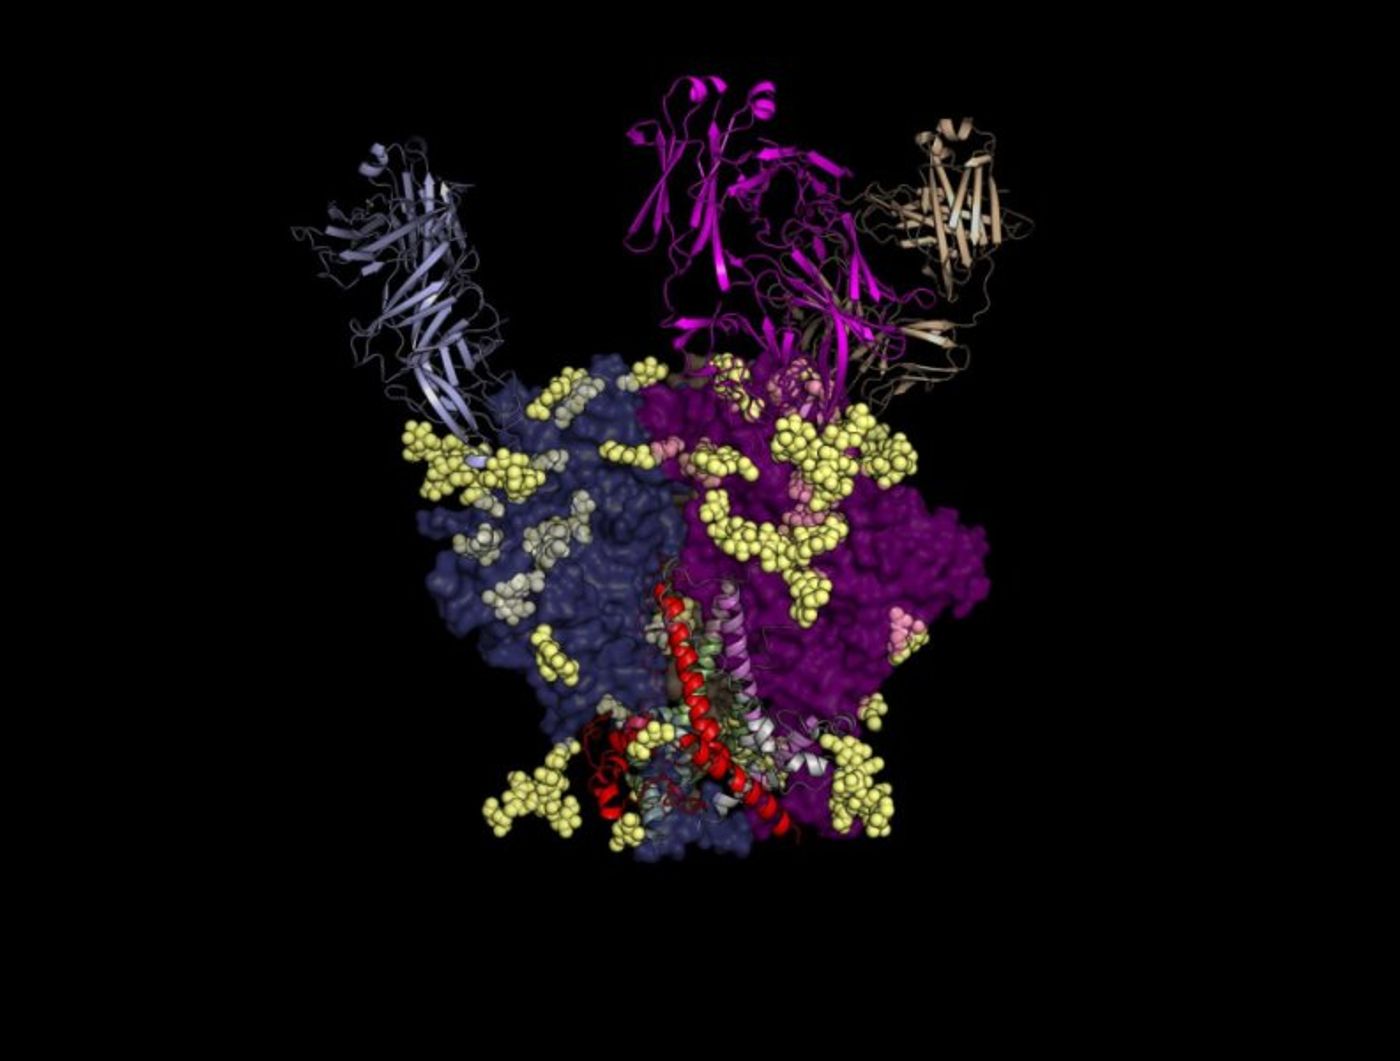 A PGT121 antibody binding to HIV